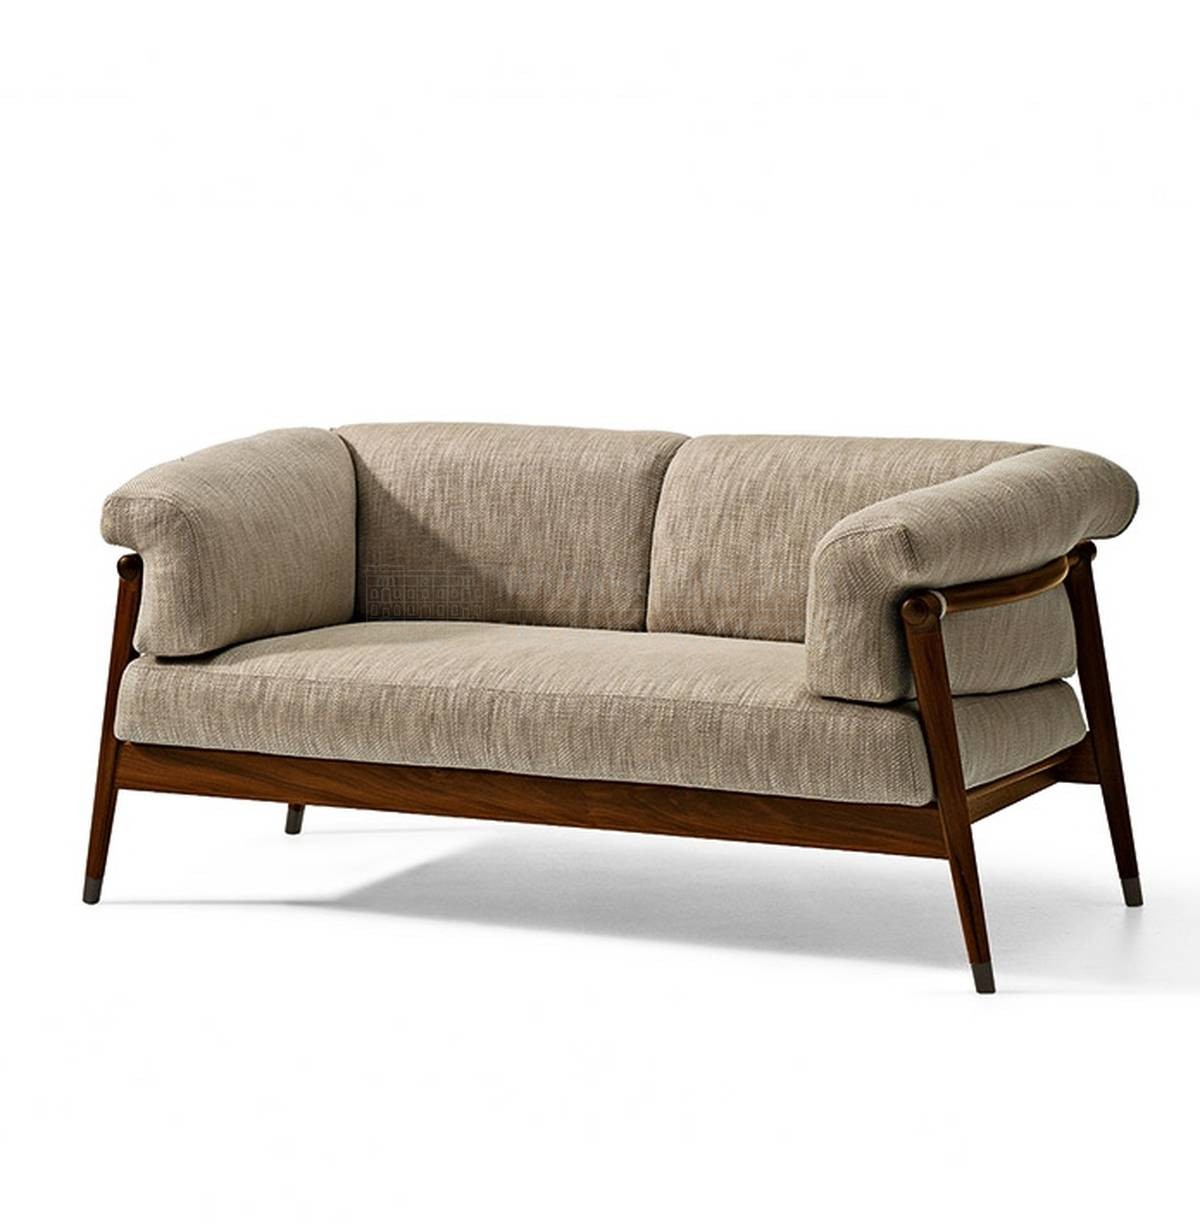 Прямой диван Derby / 57711-12 из Италии фабрики GIORGETTI